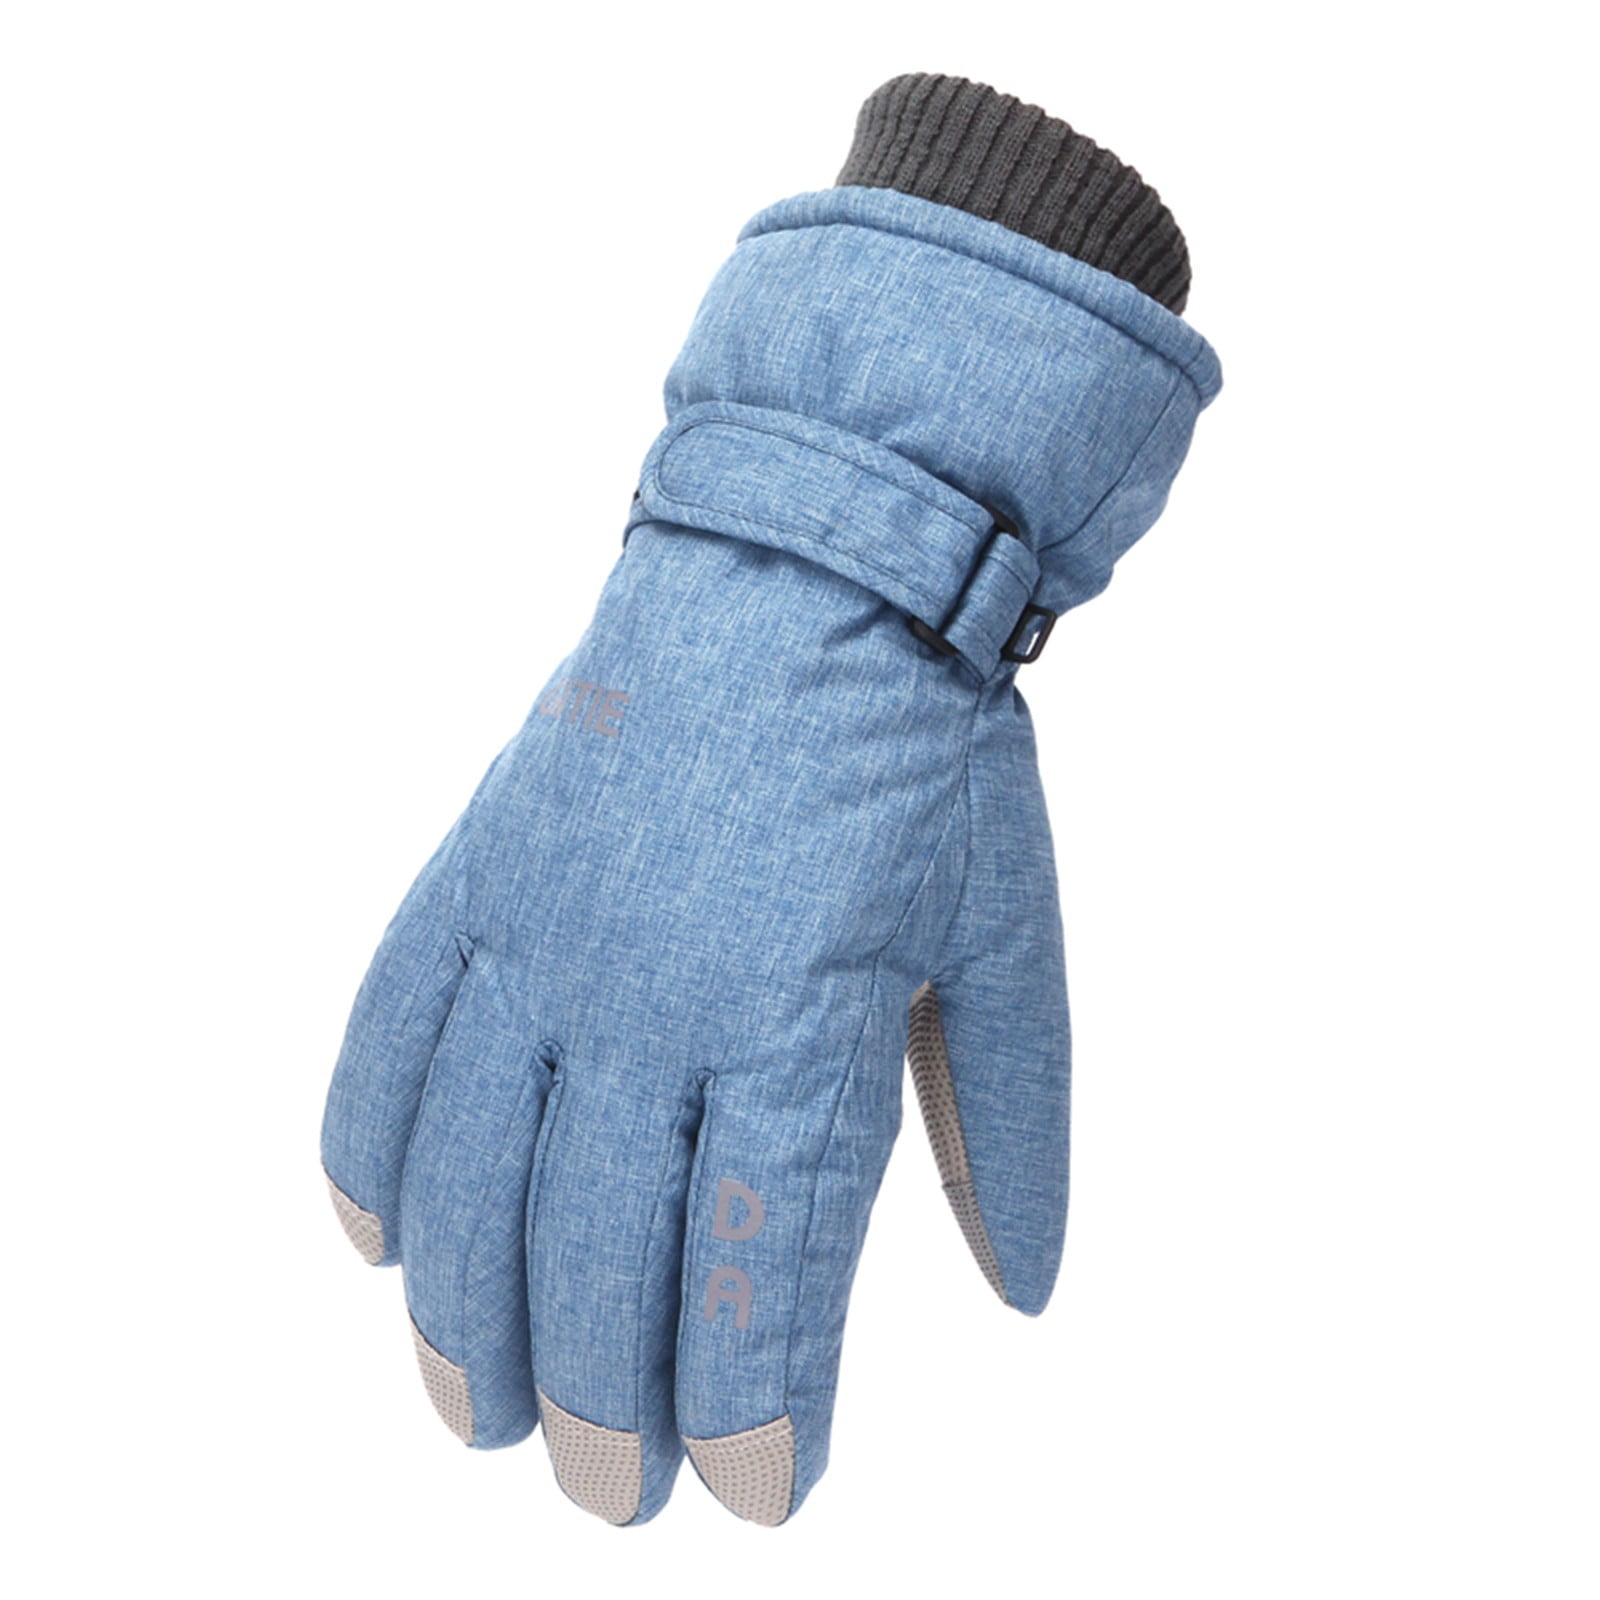 accsa Kids Ski Gloves Winter Waterproof 3M Thinsulate Snow Gloves Warm Windproof Gloves for Girls 